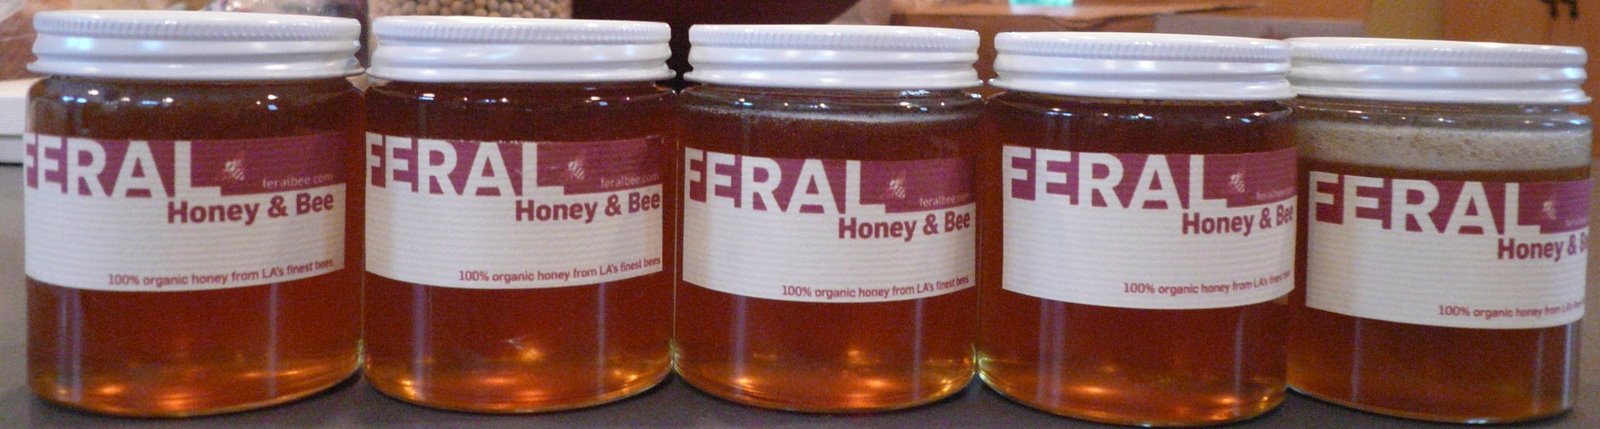 Feral Honey from LA